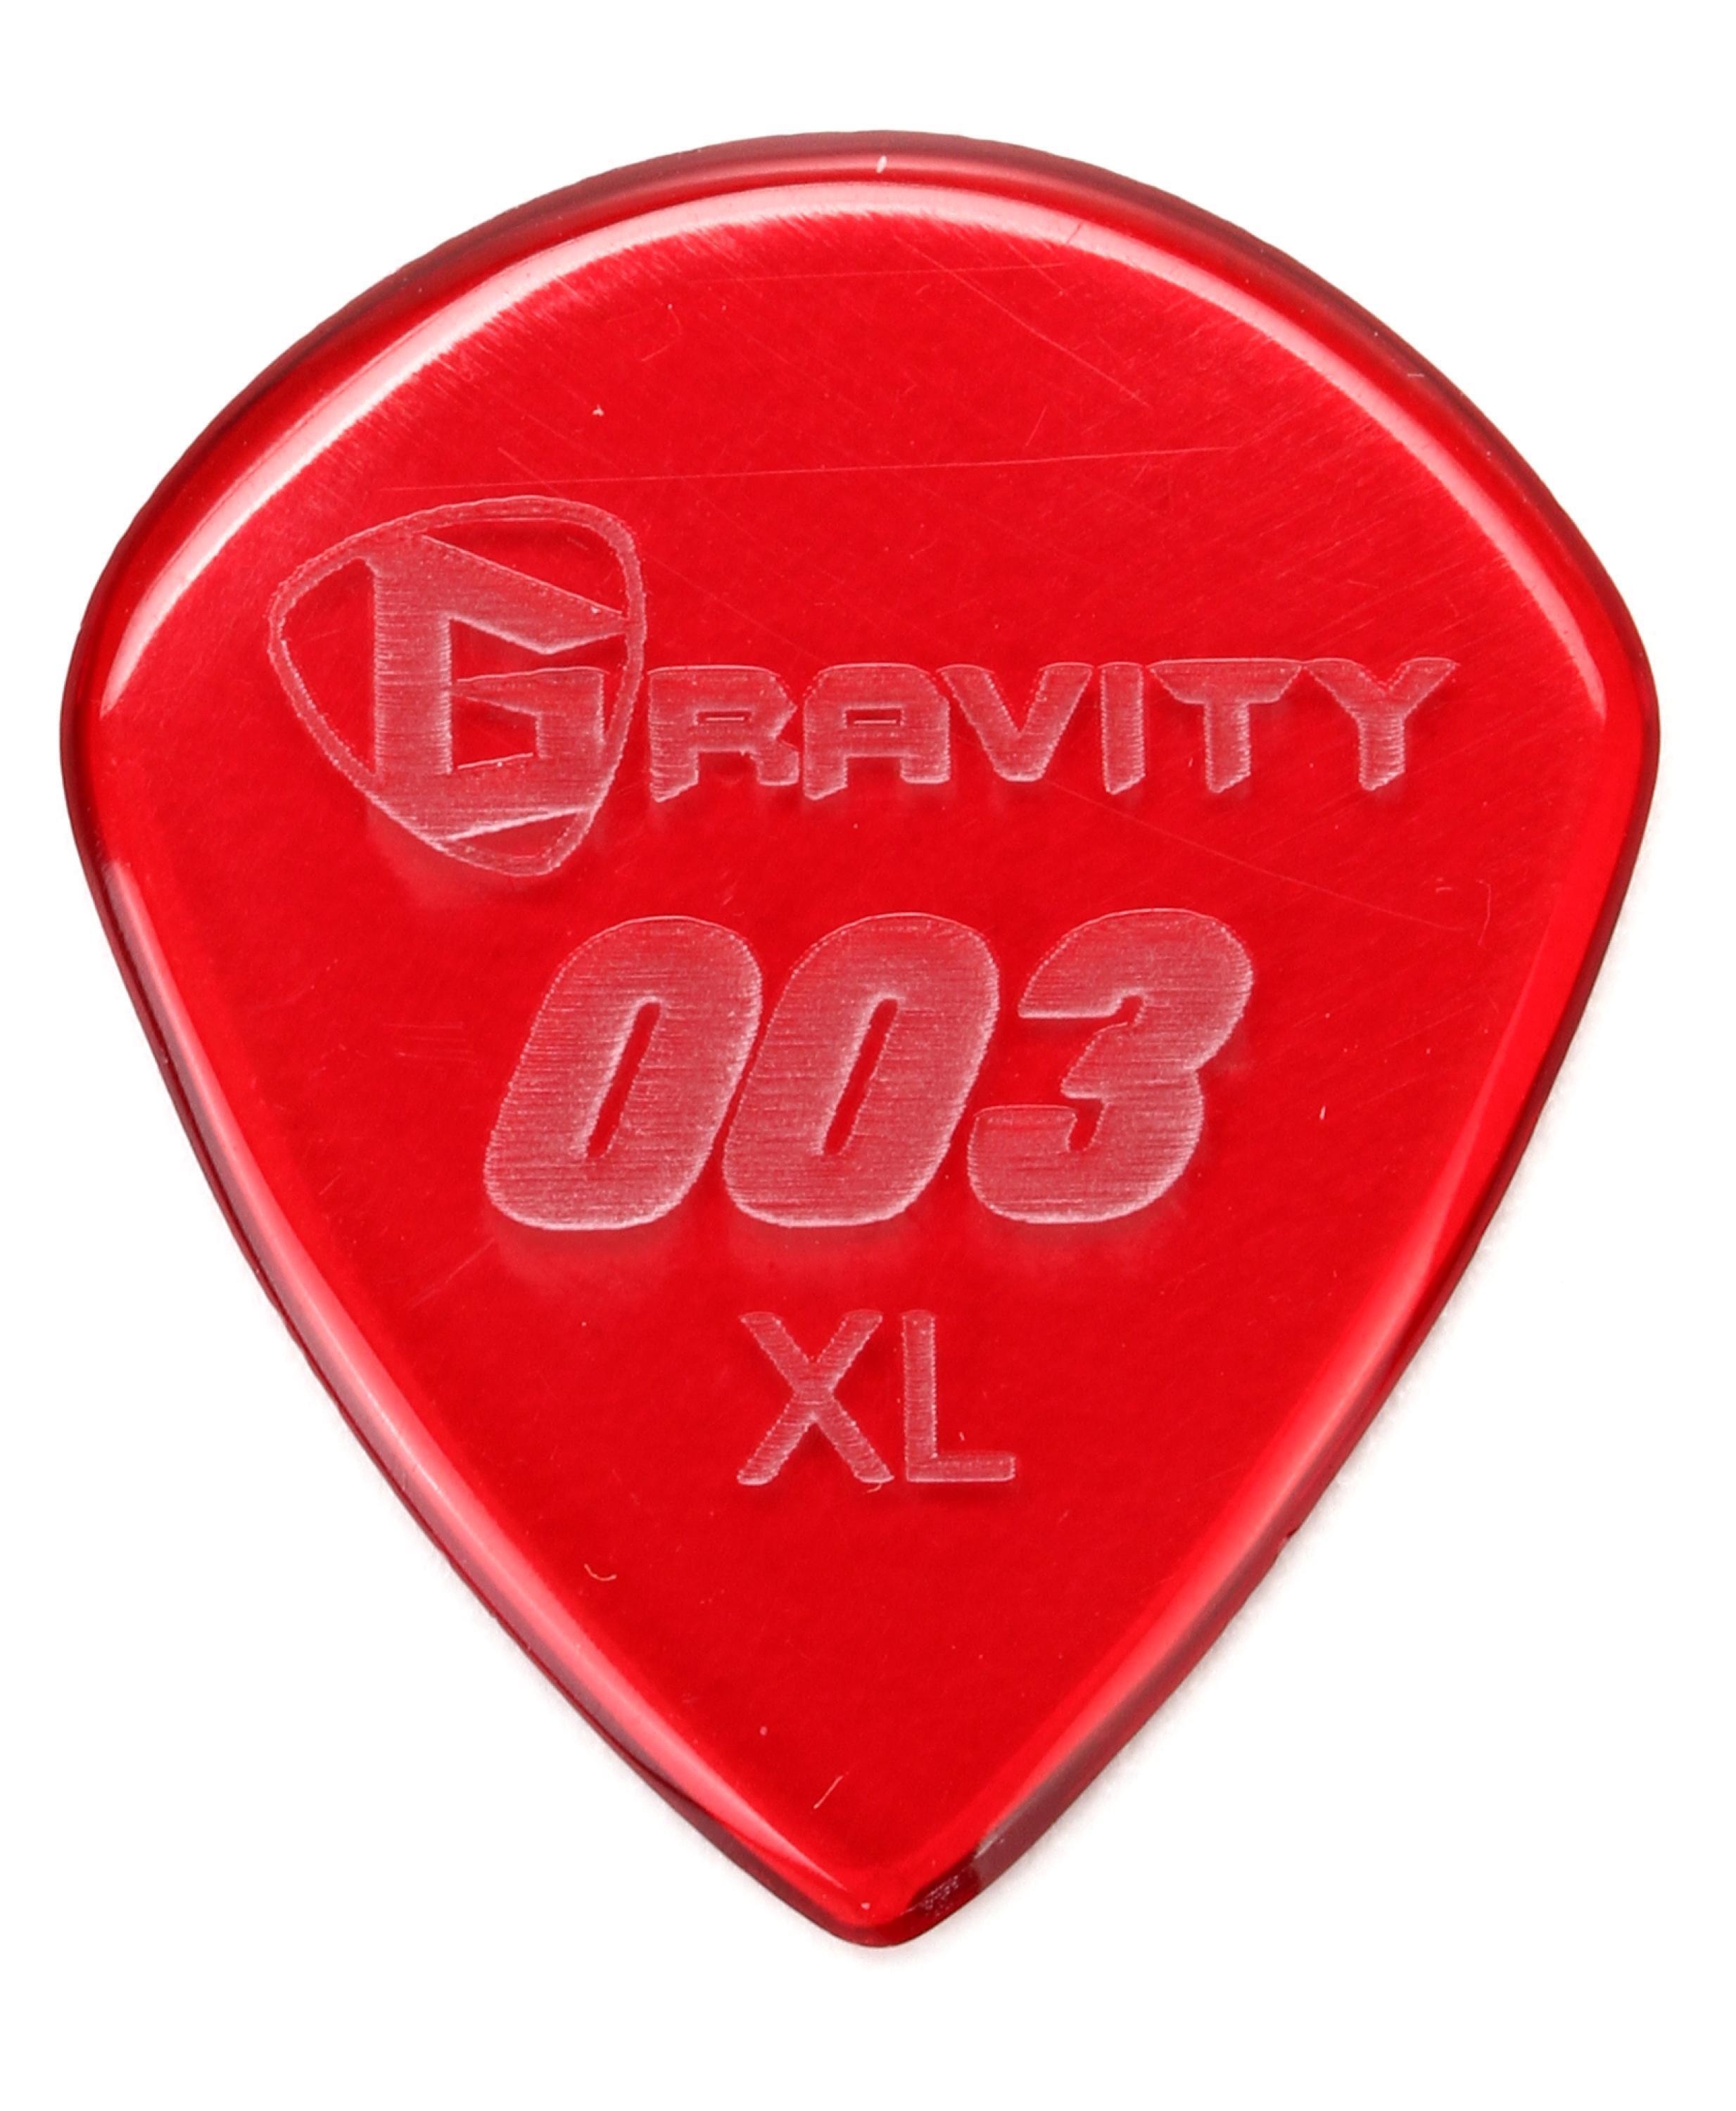 Gravity Picks J3 XL Replica, 1.5mm thickness